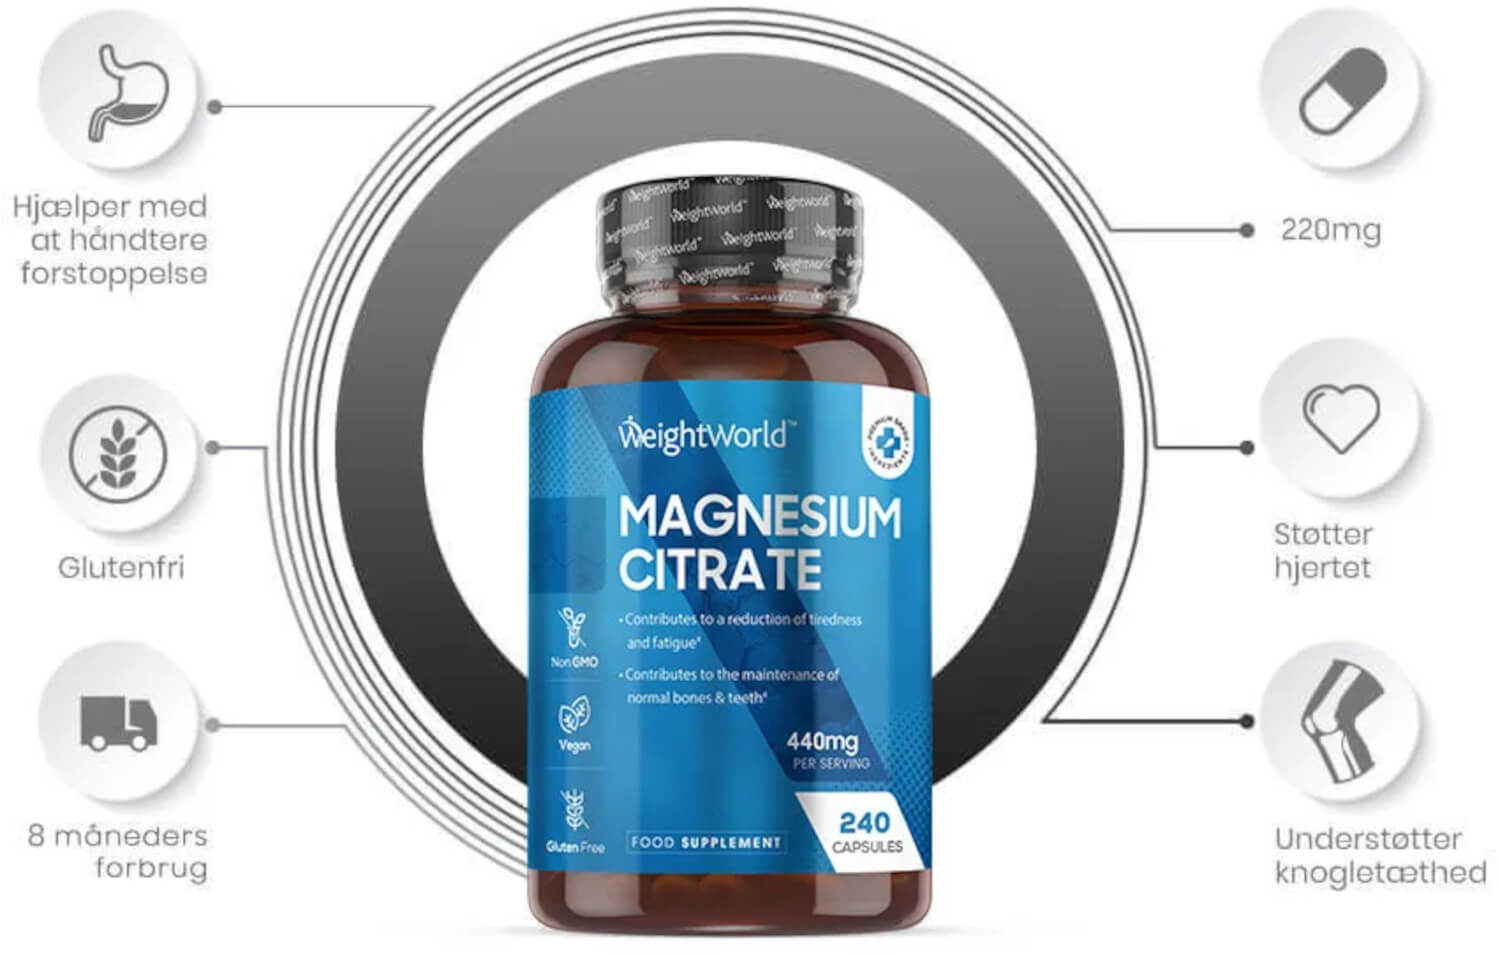 Hvordan virker magnesium?